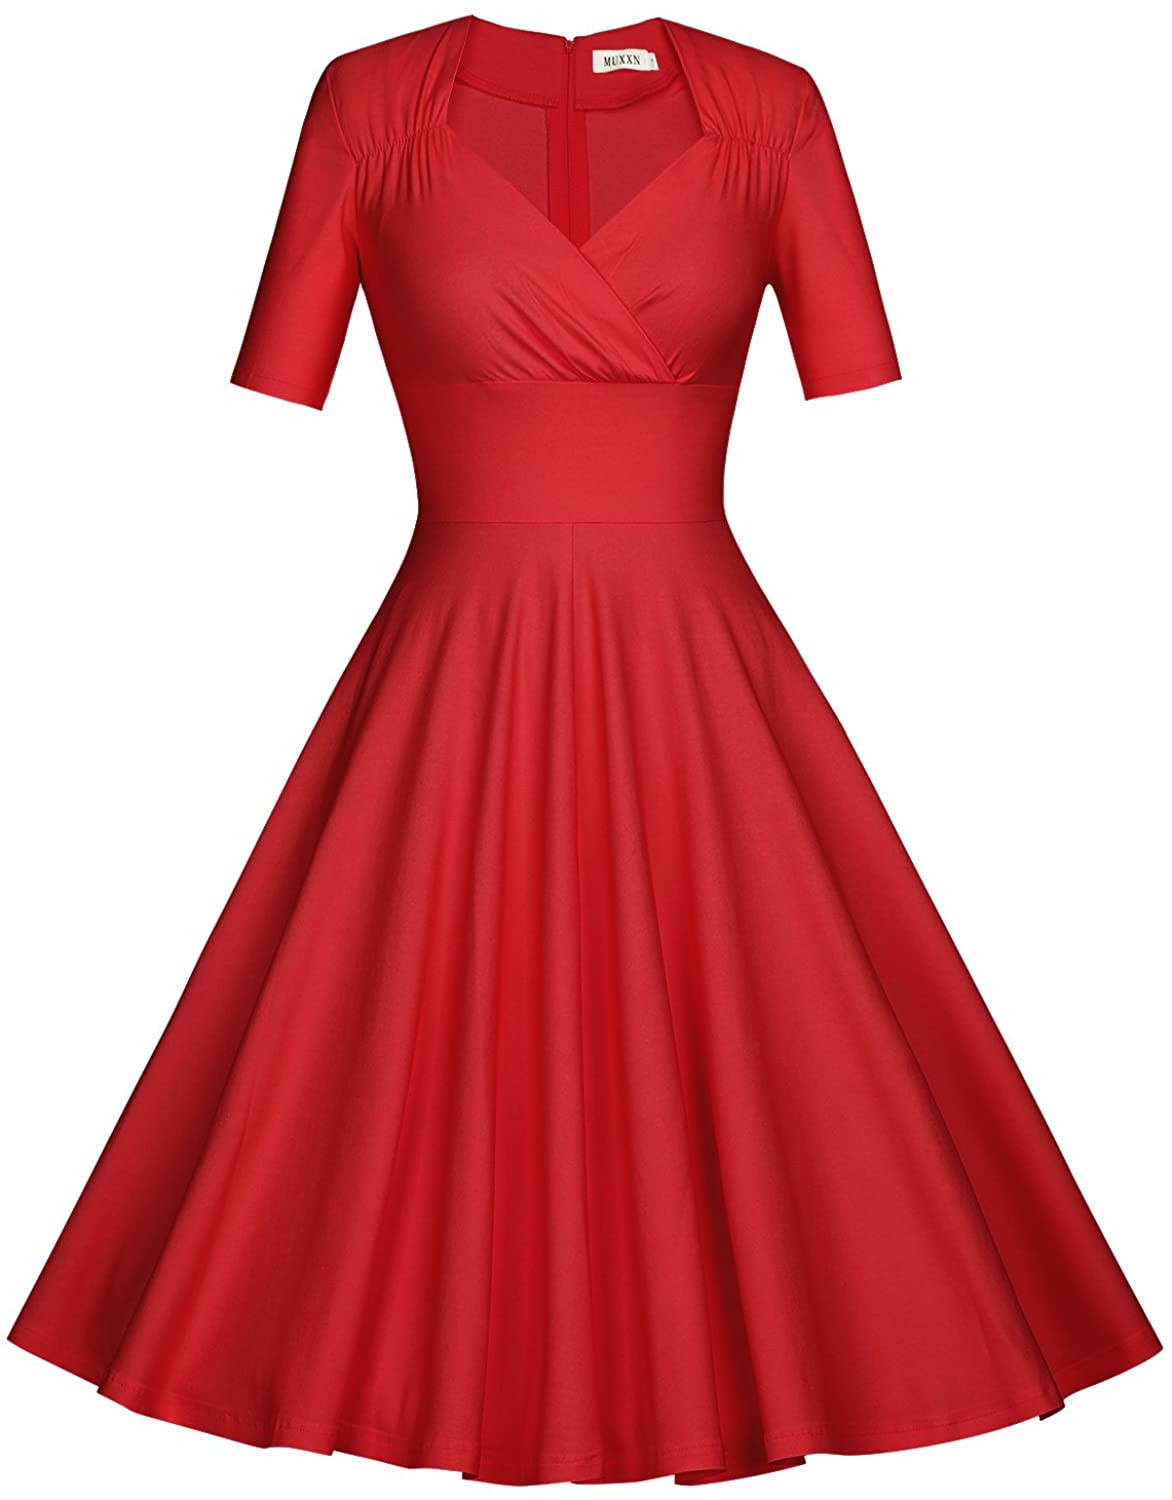 MUXXN Womens 50s Vintage Short Sleeve Pleated Swing Dress